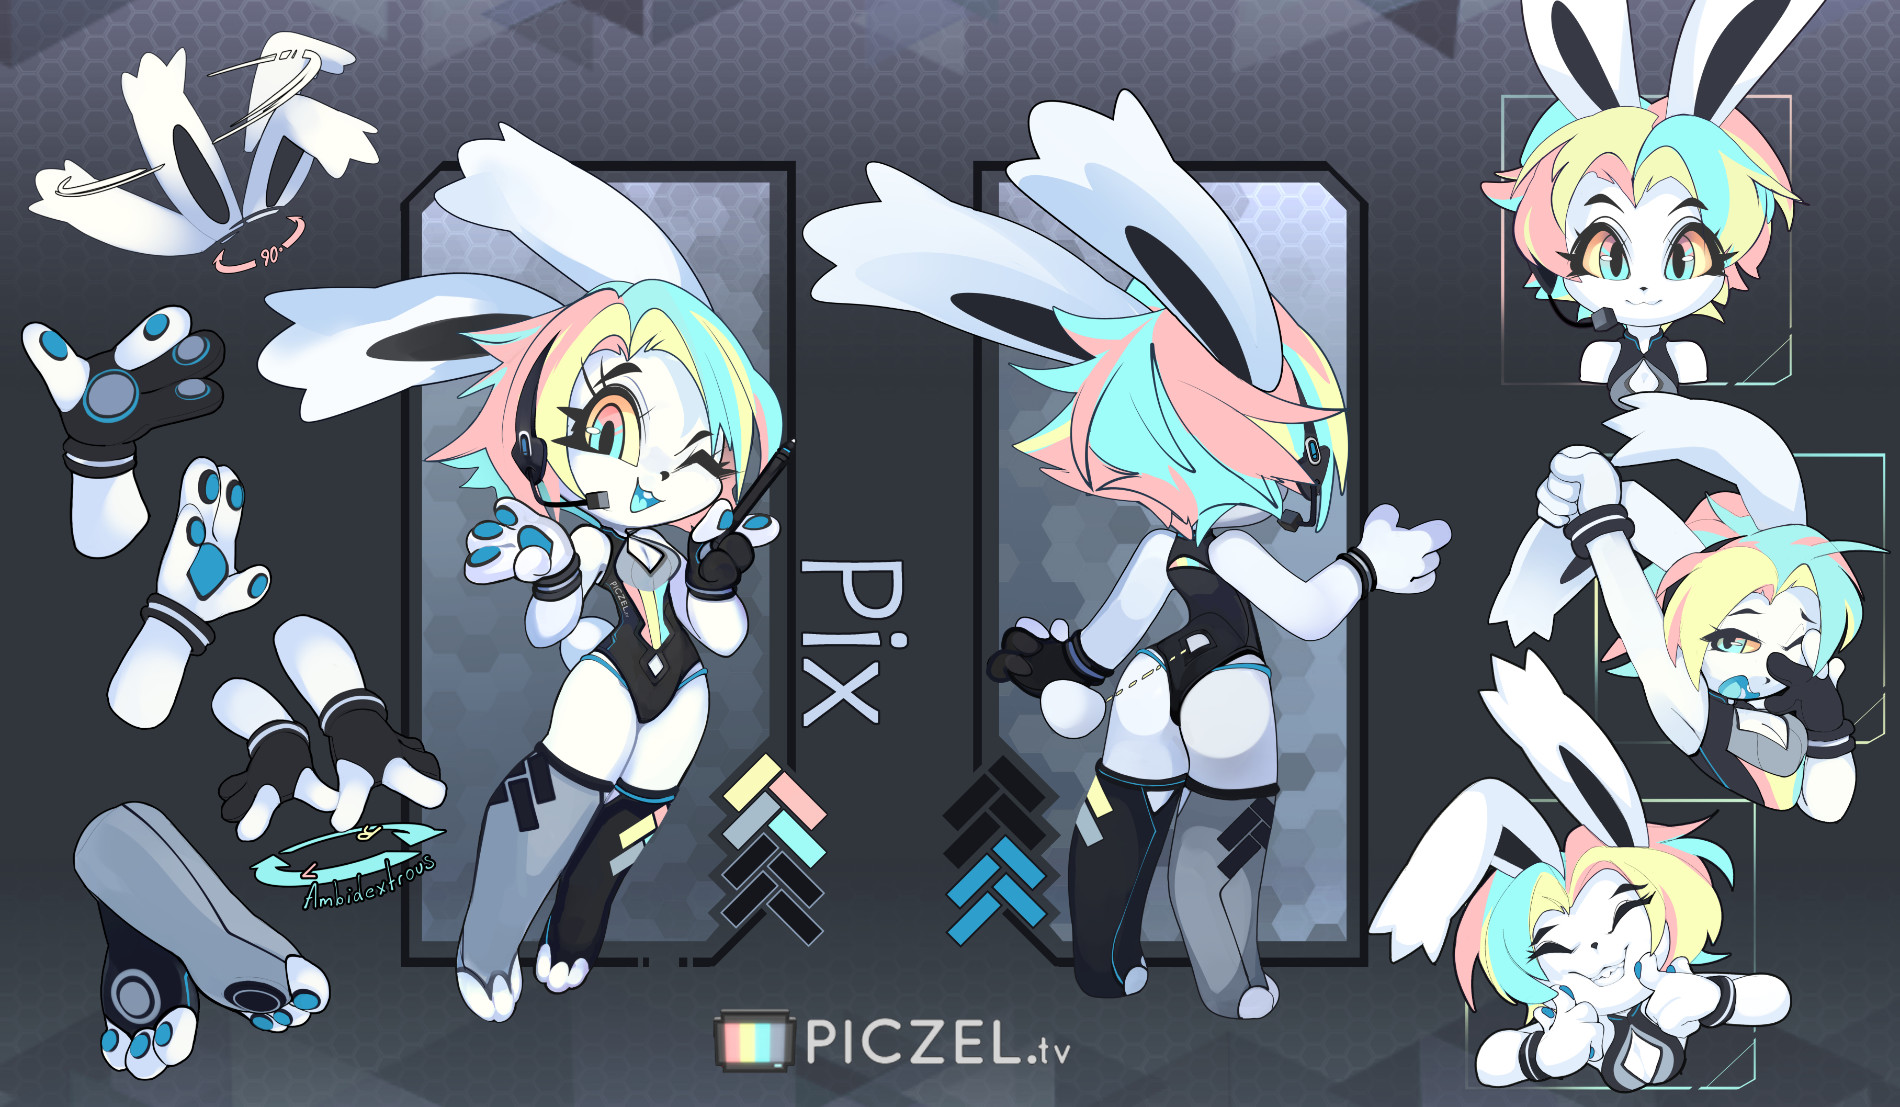 Pix, the new Piczel mascot